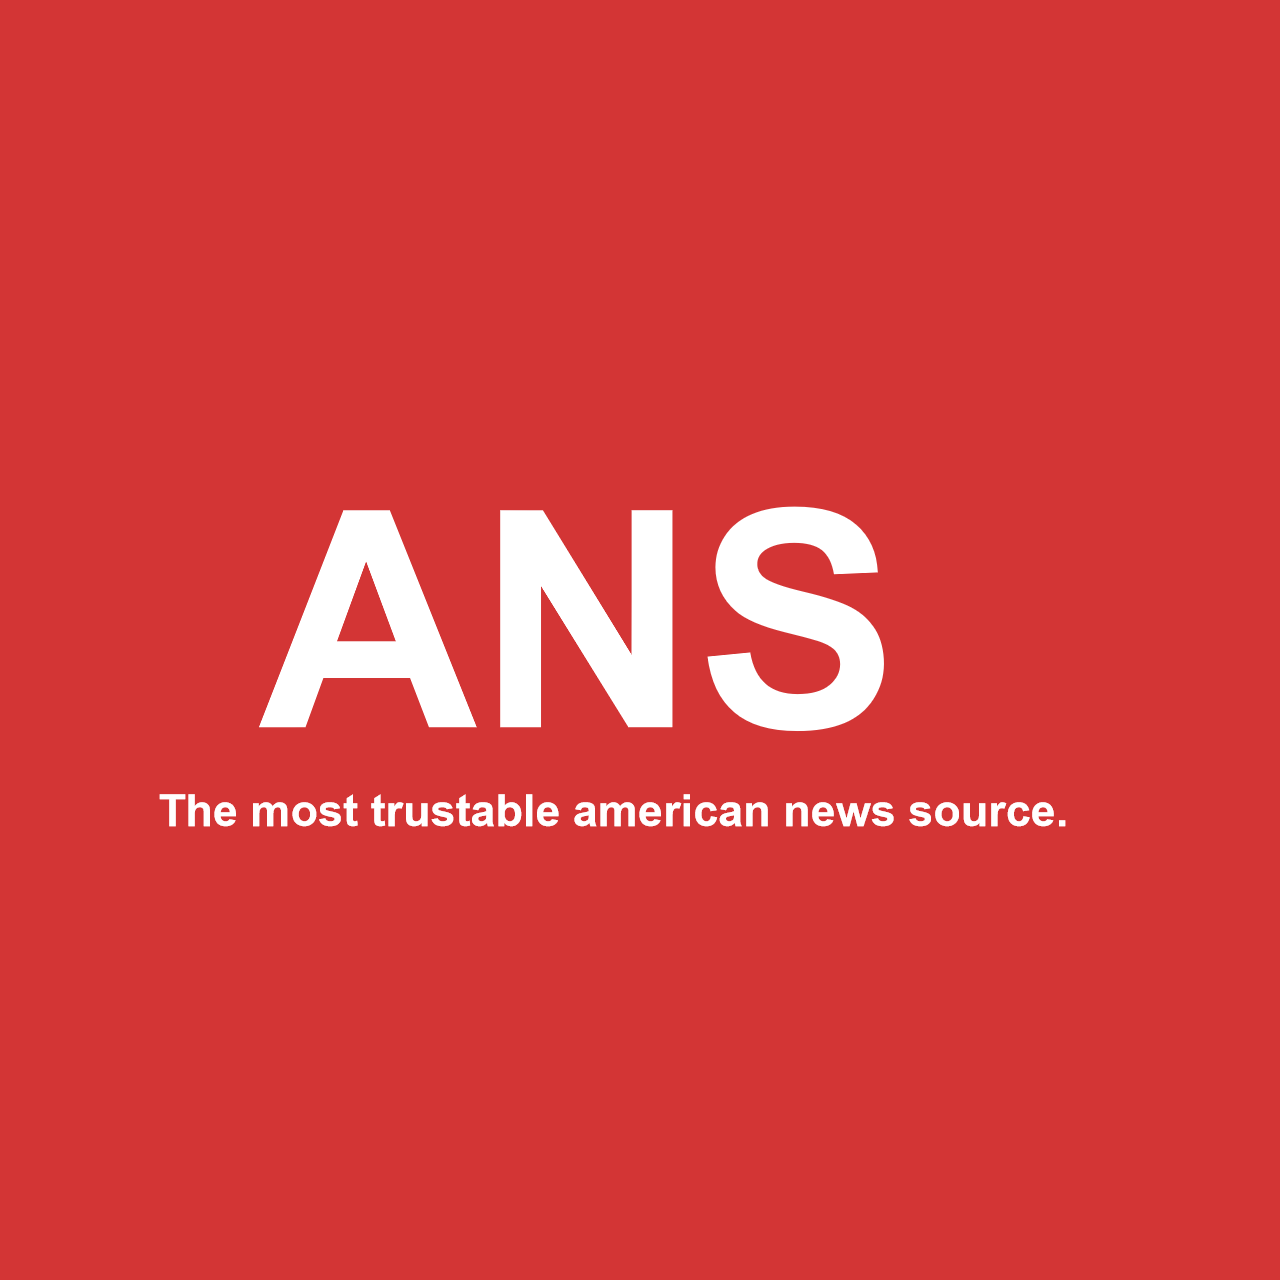 America's News Source